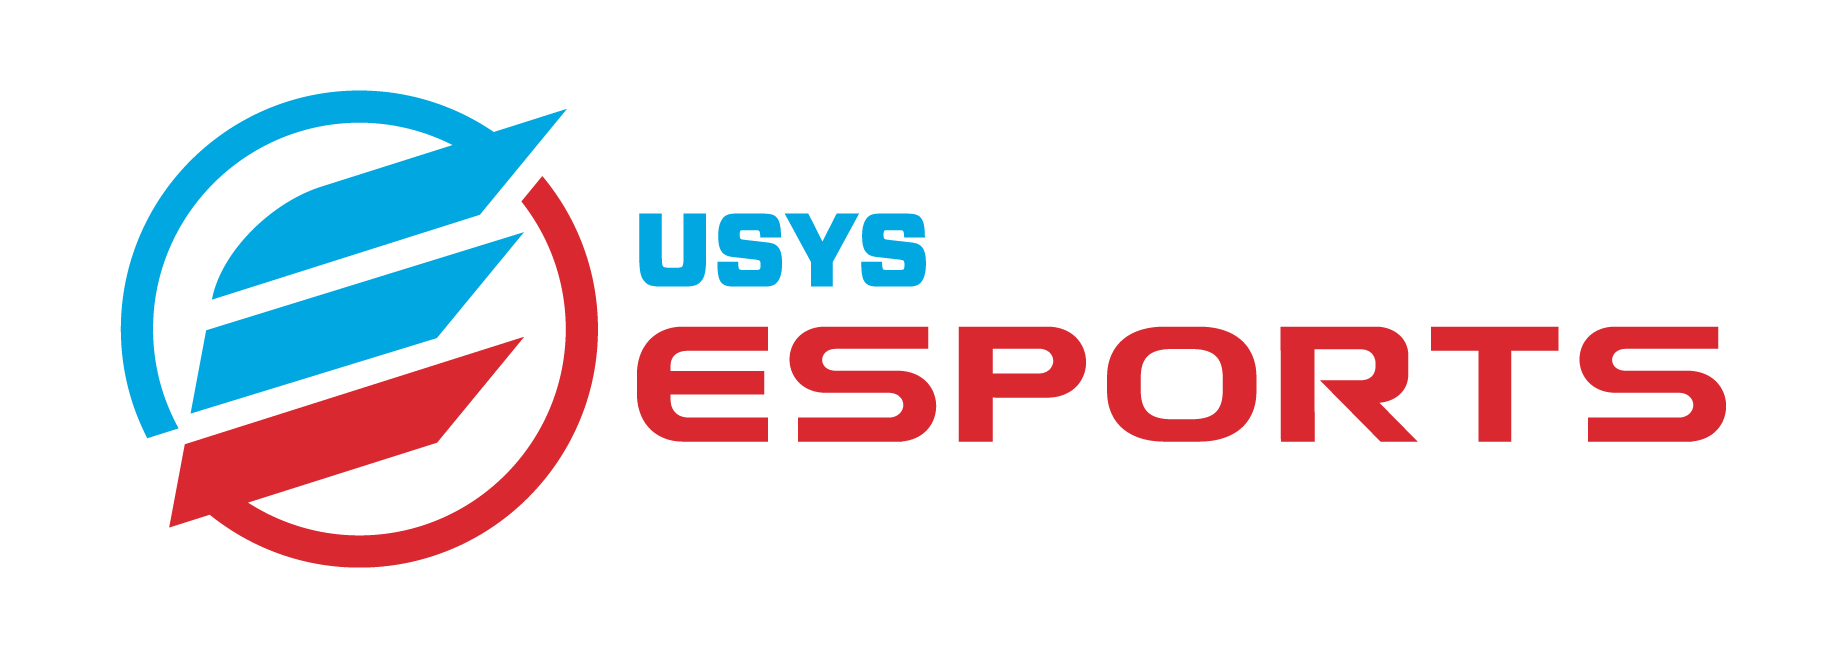 USYS_ESPORTS_FC_WBG